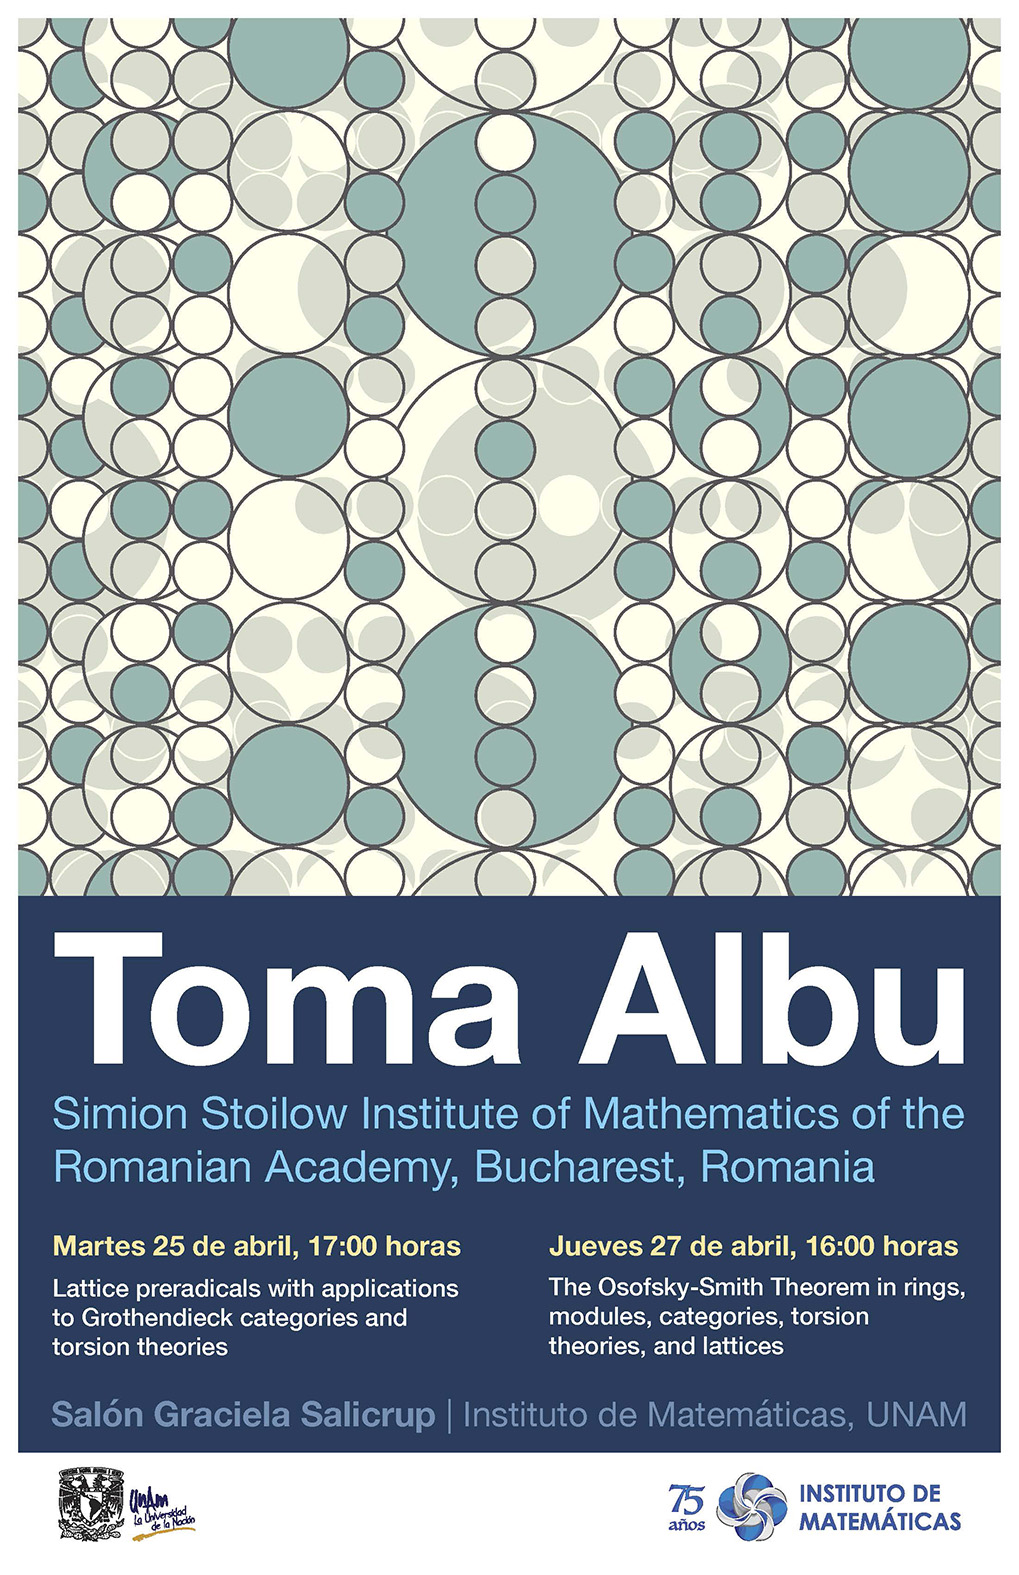 Pláticas con Toma Albu, Simion Stoilow Institute of Mathematics of the Romanian Academy, Bucharest, Romania